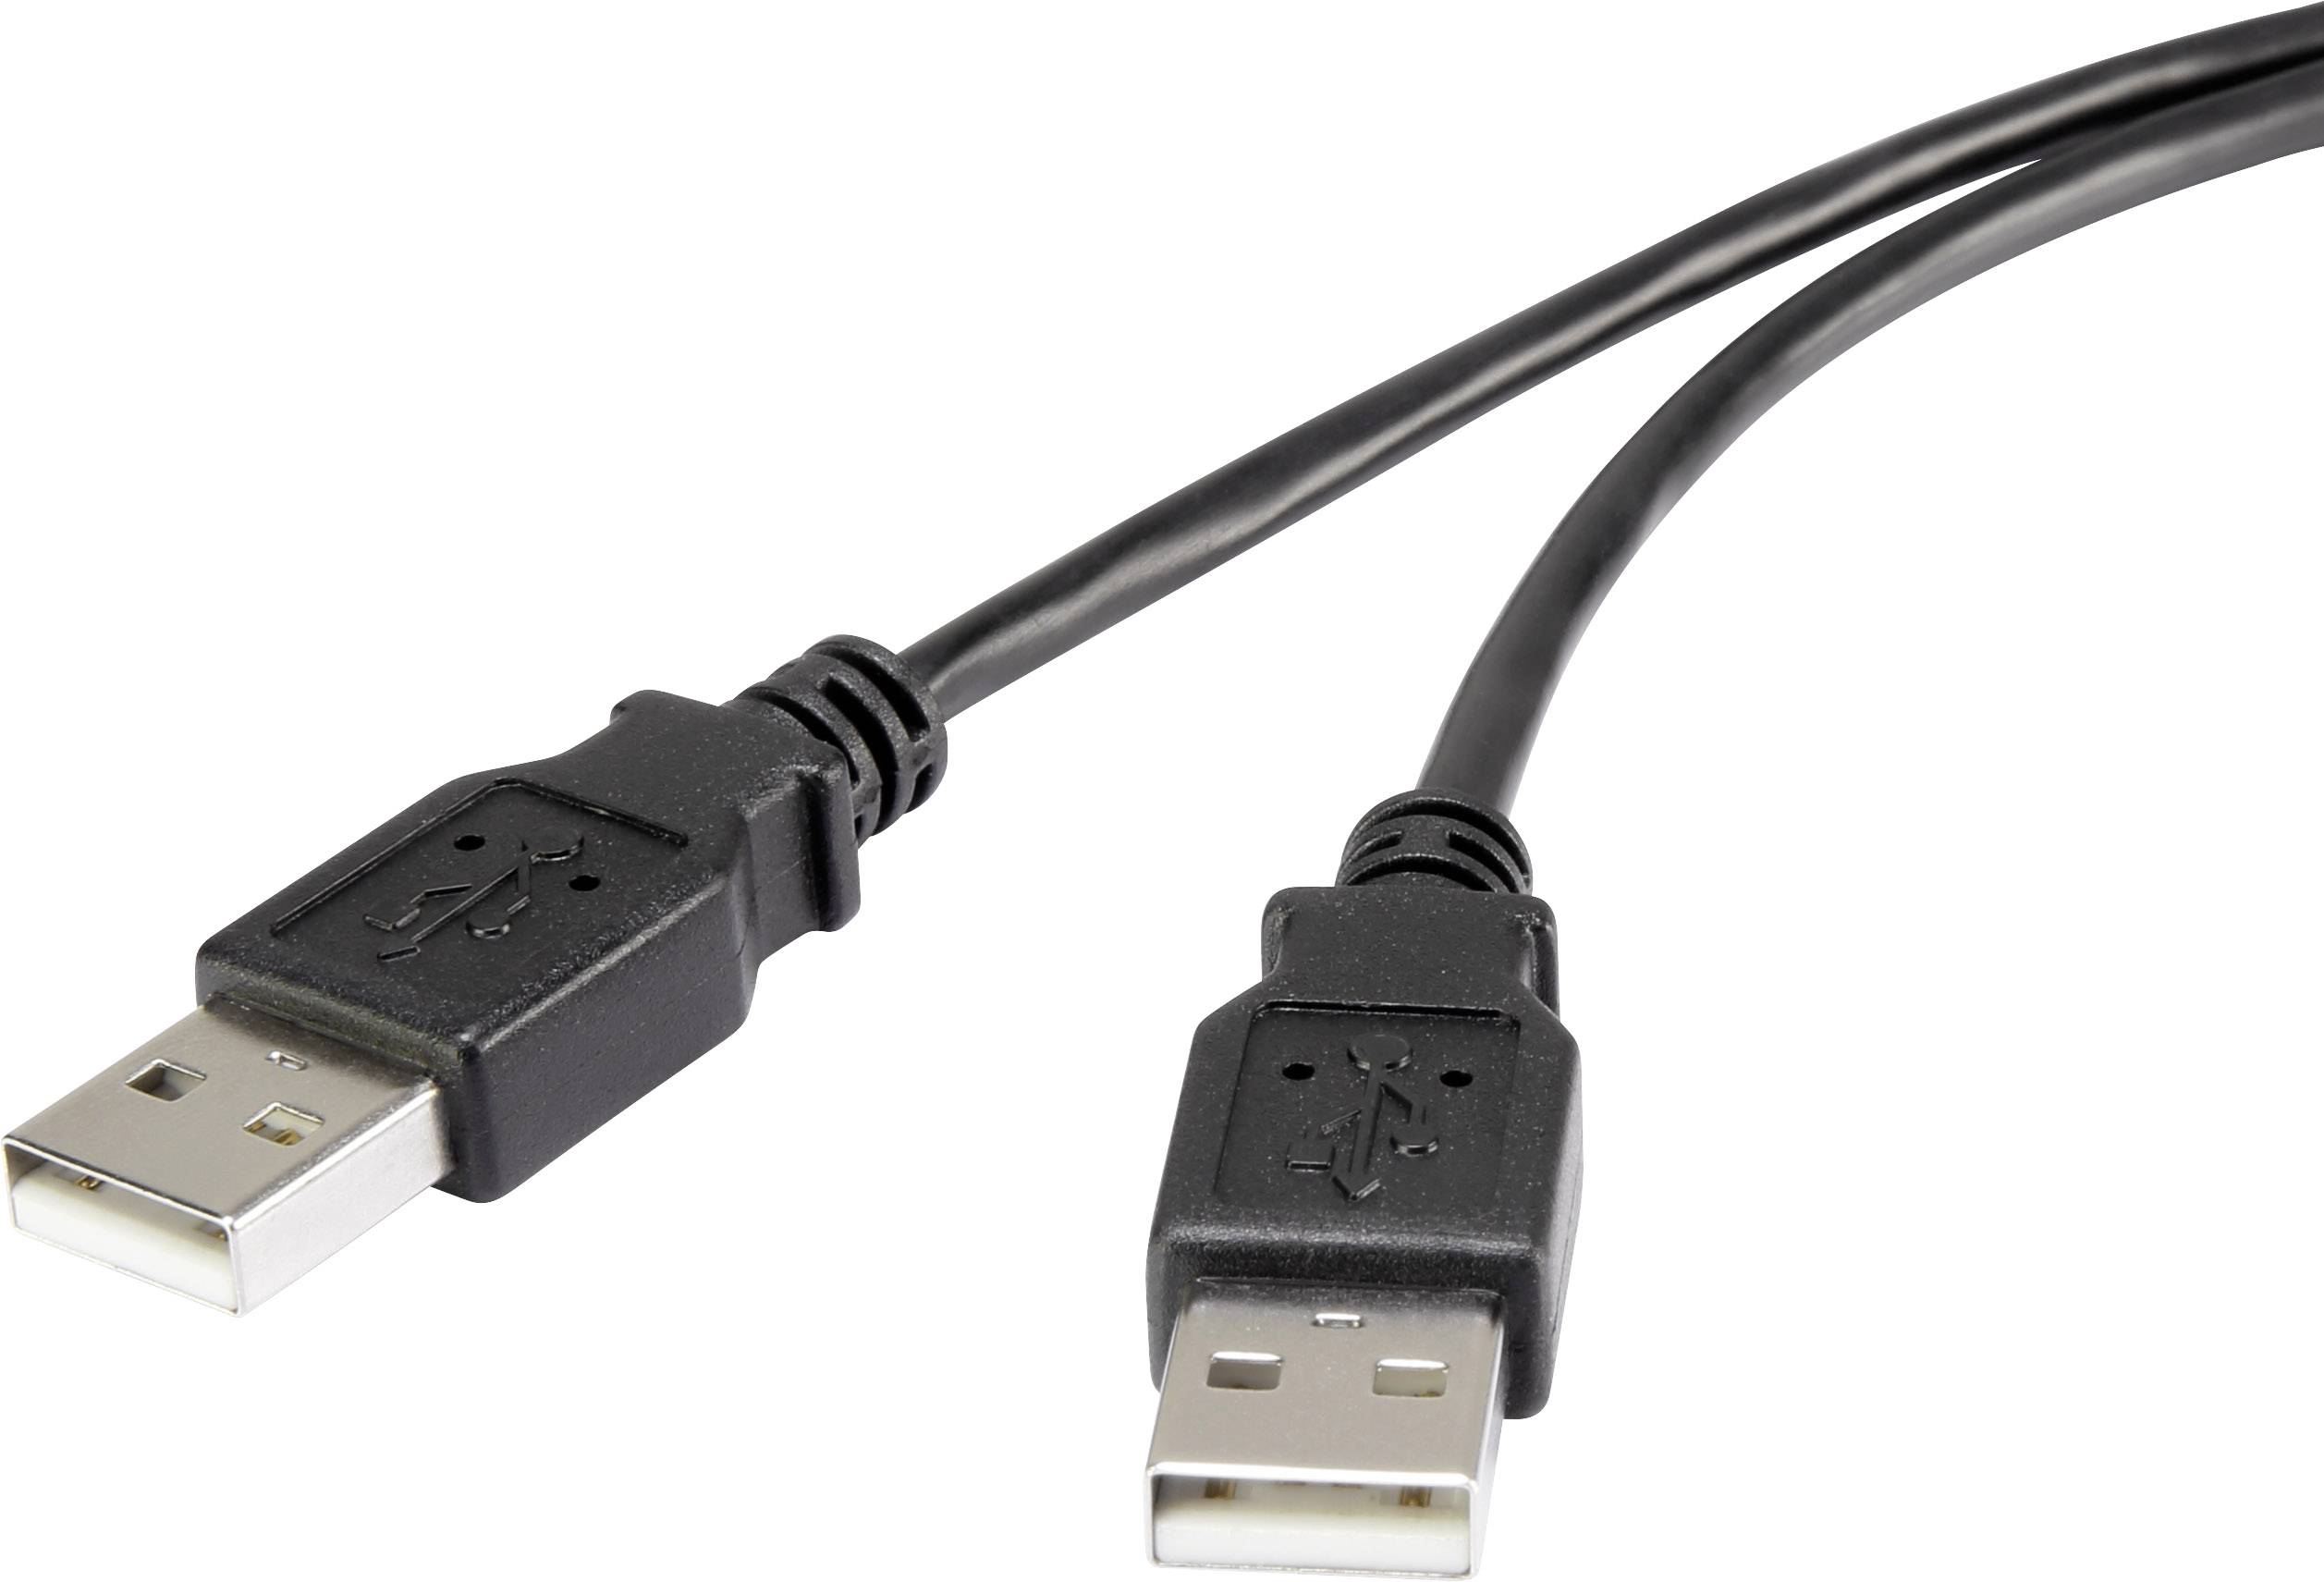 CONRAD Renkforce USB 2.0 Kabel [1x USB 2.0 Stecker A - 1x USB 2.0 Stecker A] 1.8 m Schwarz vergoldet